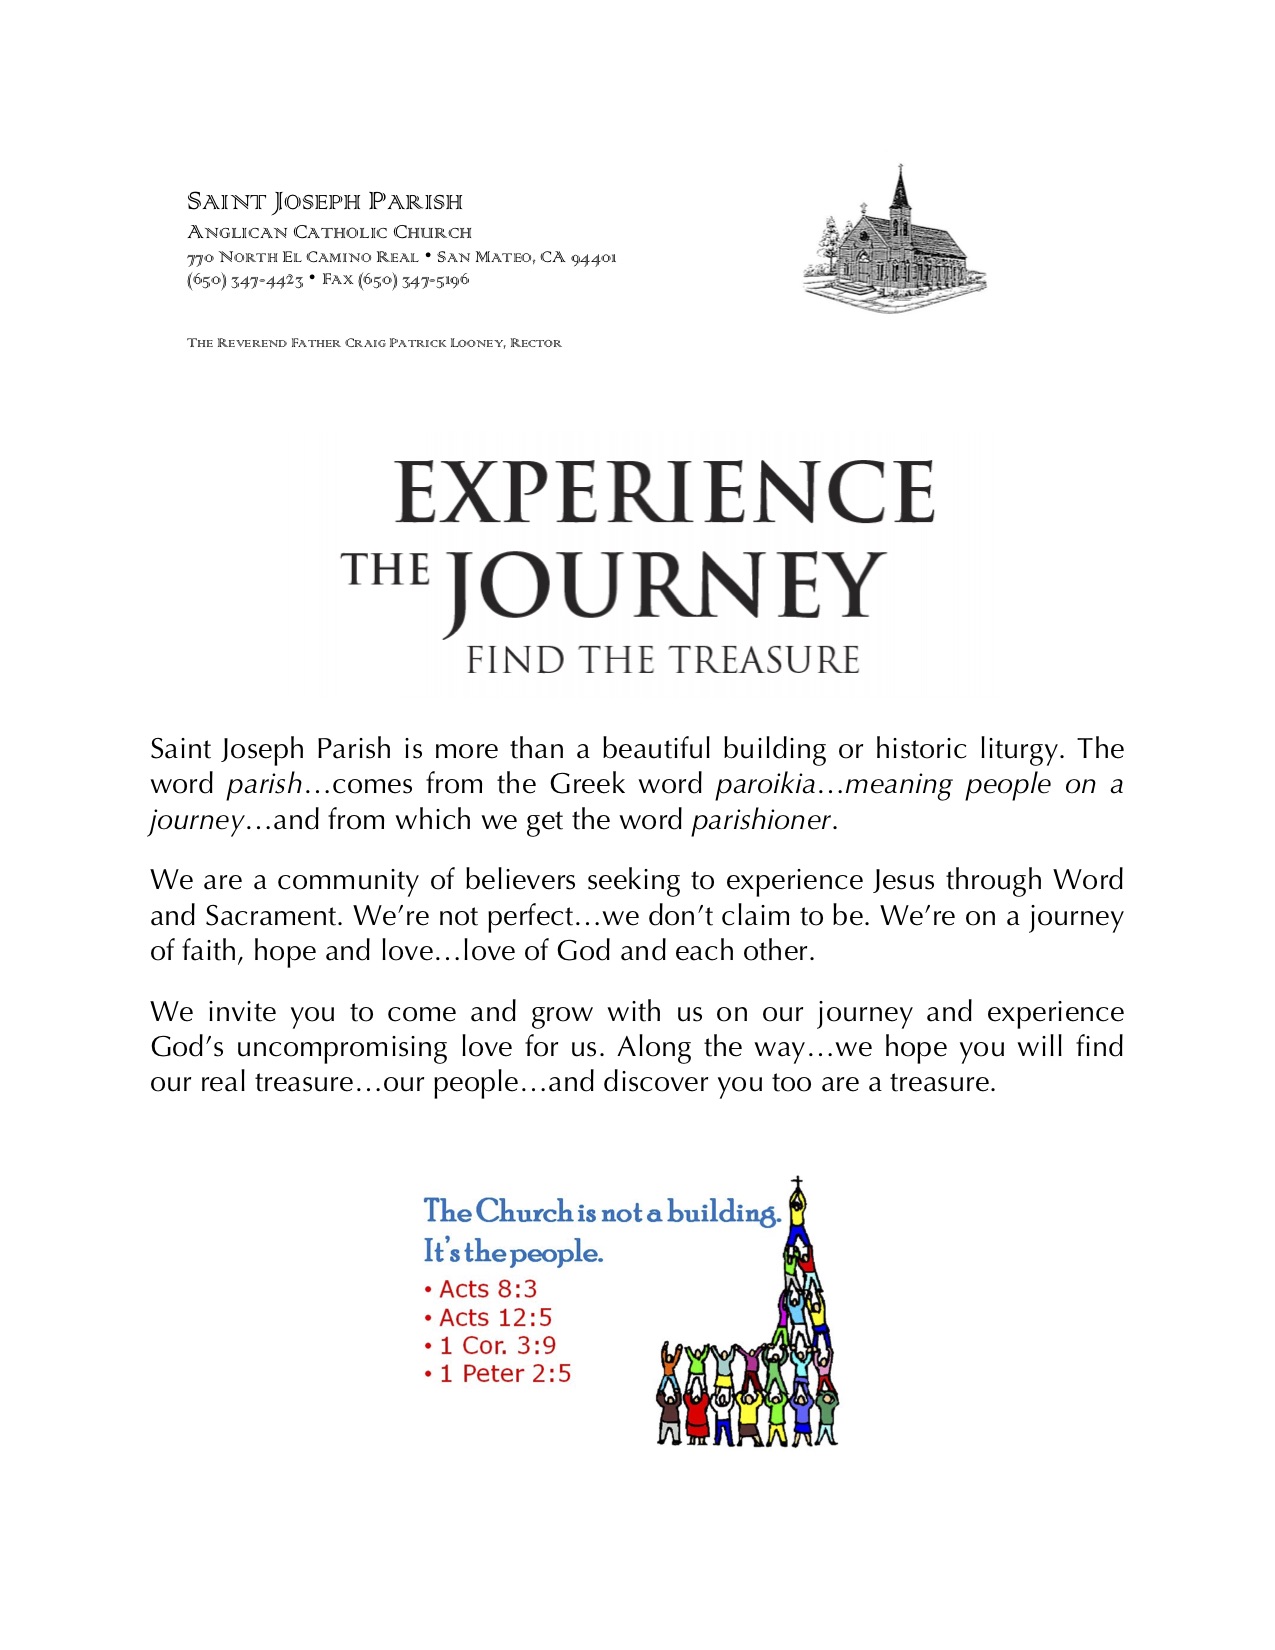 Experience Saint Joseph Parish